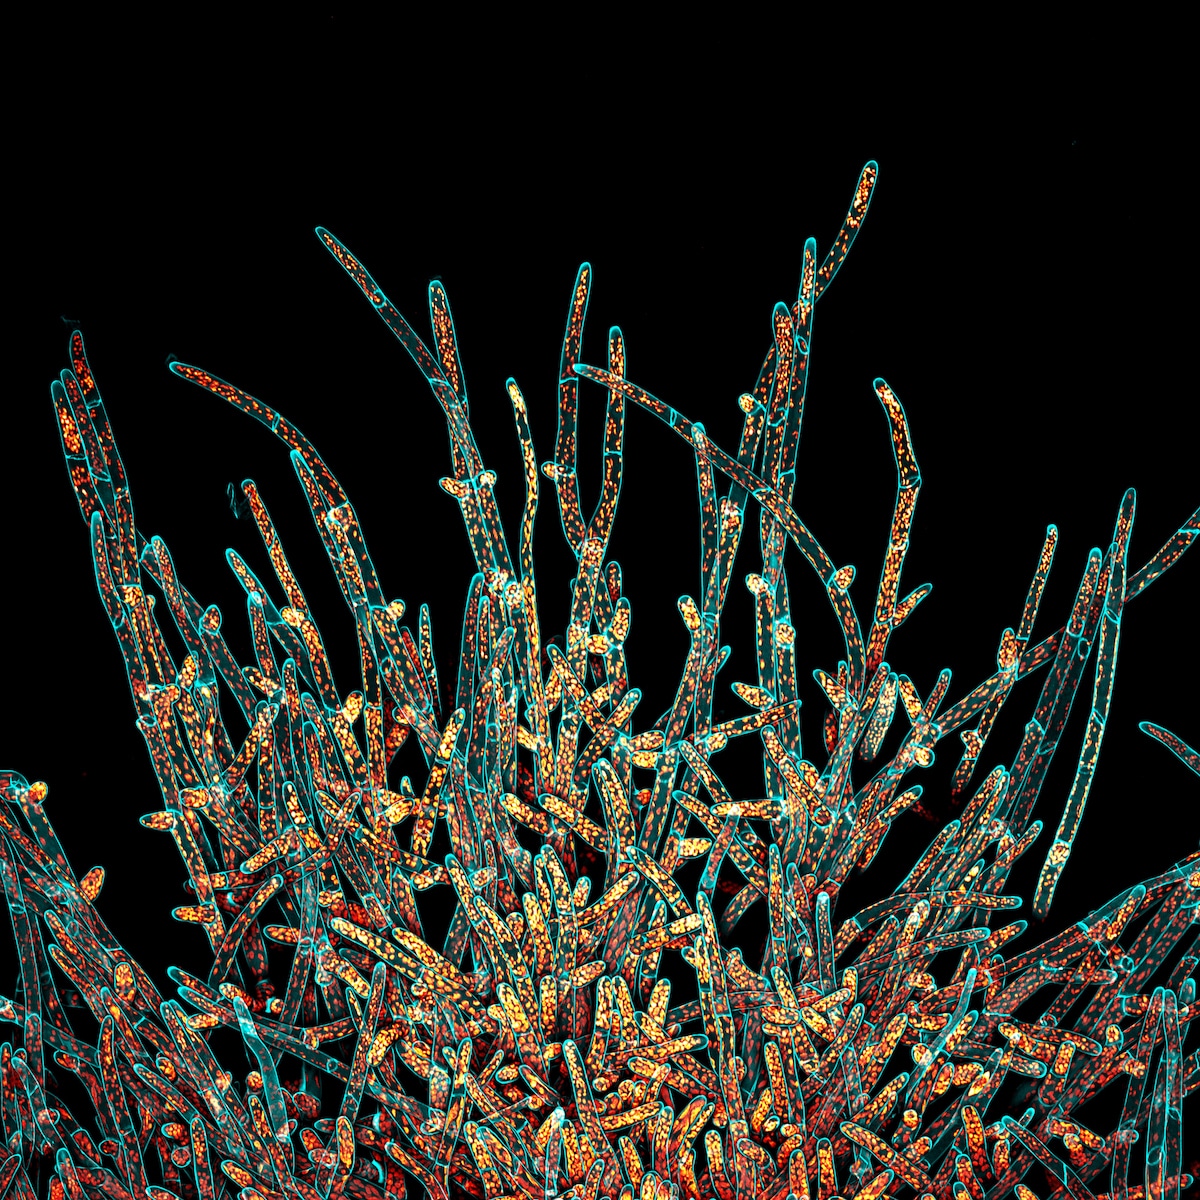 Microscopy of stack of moss Physcomitrium patens protonemal cells